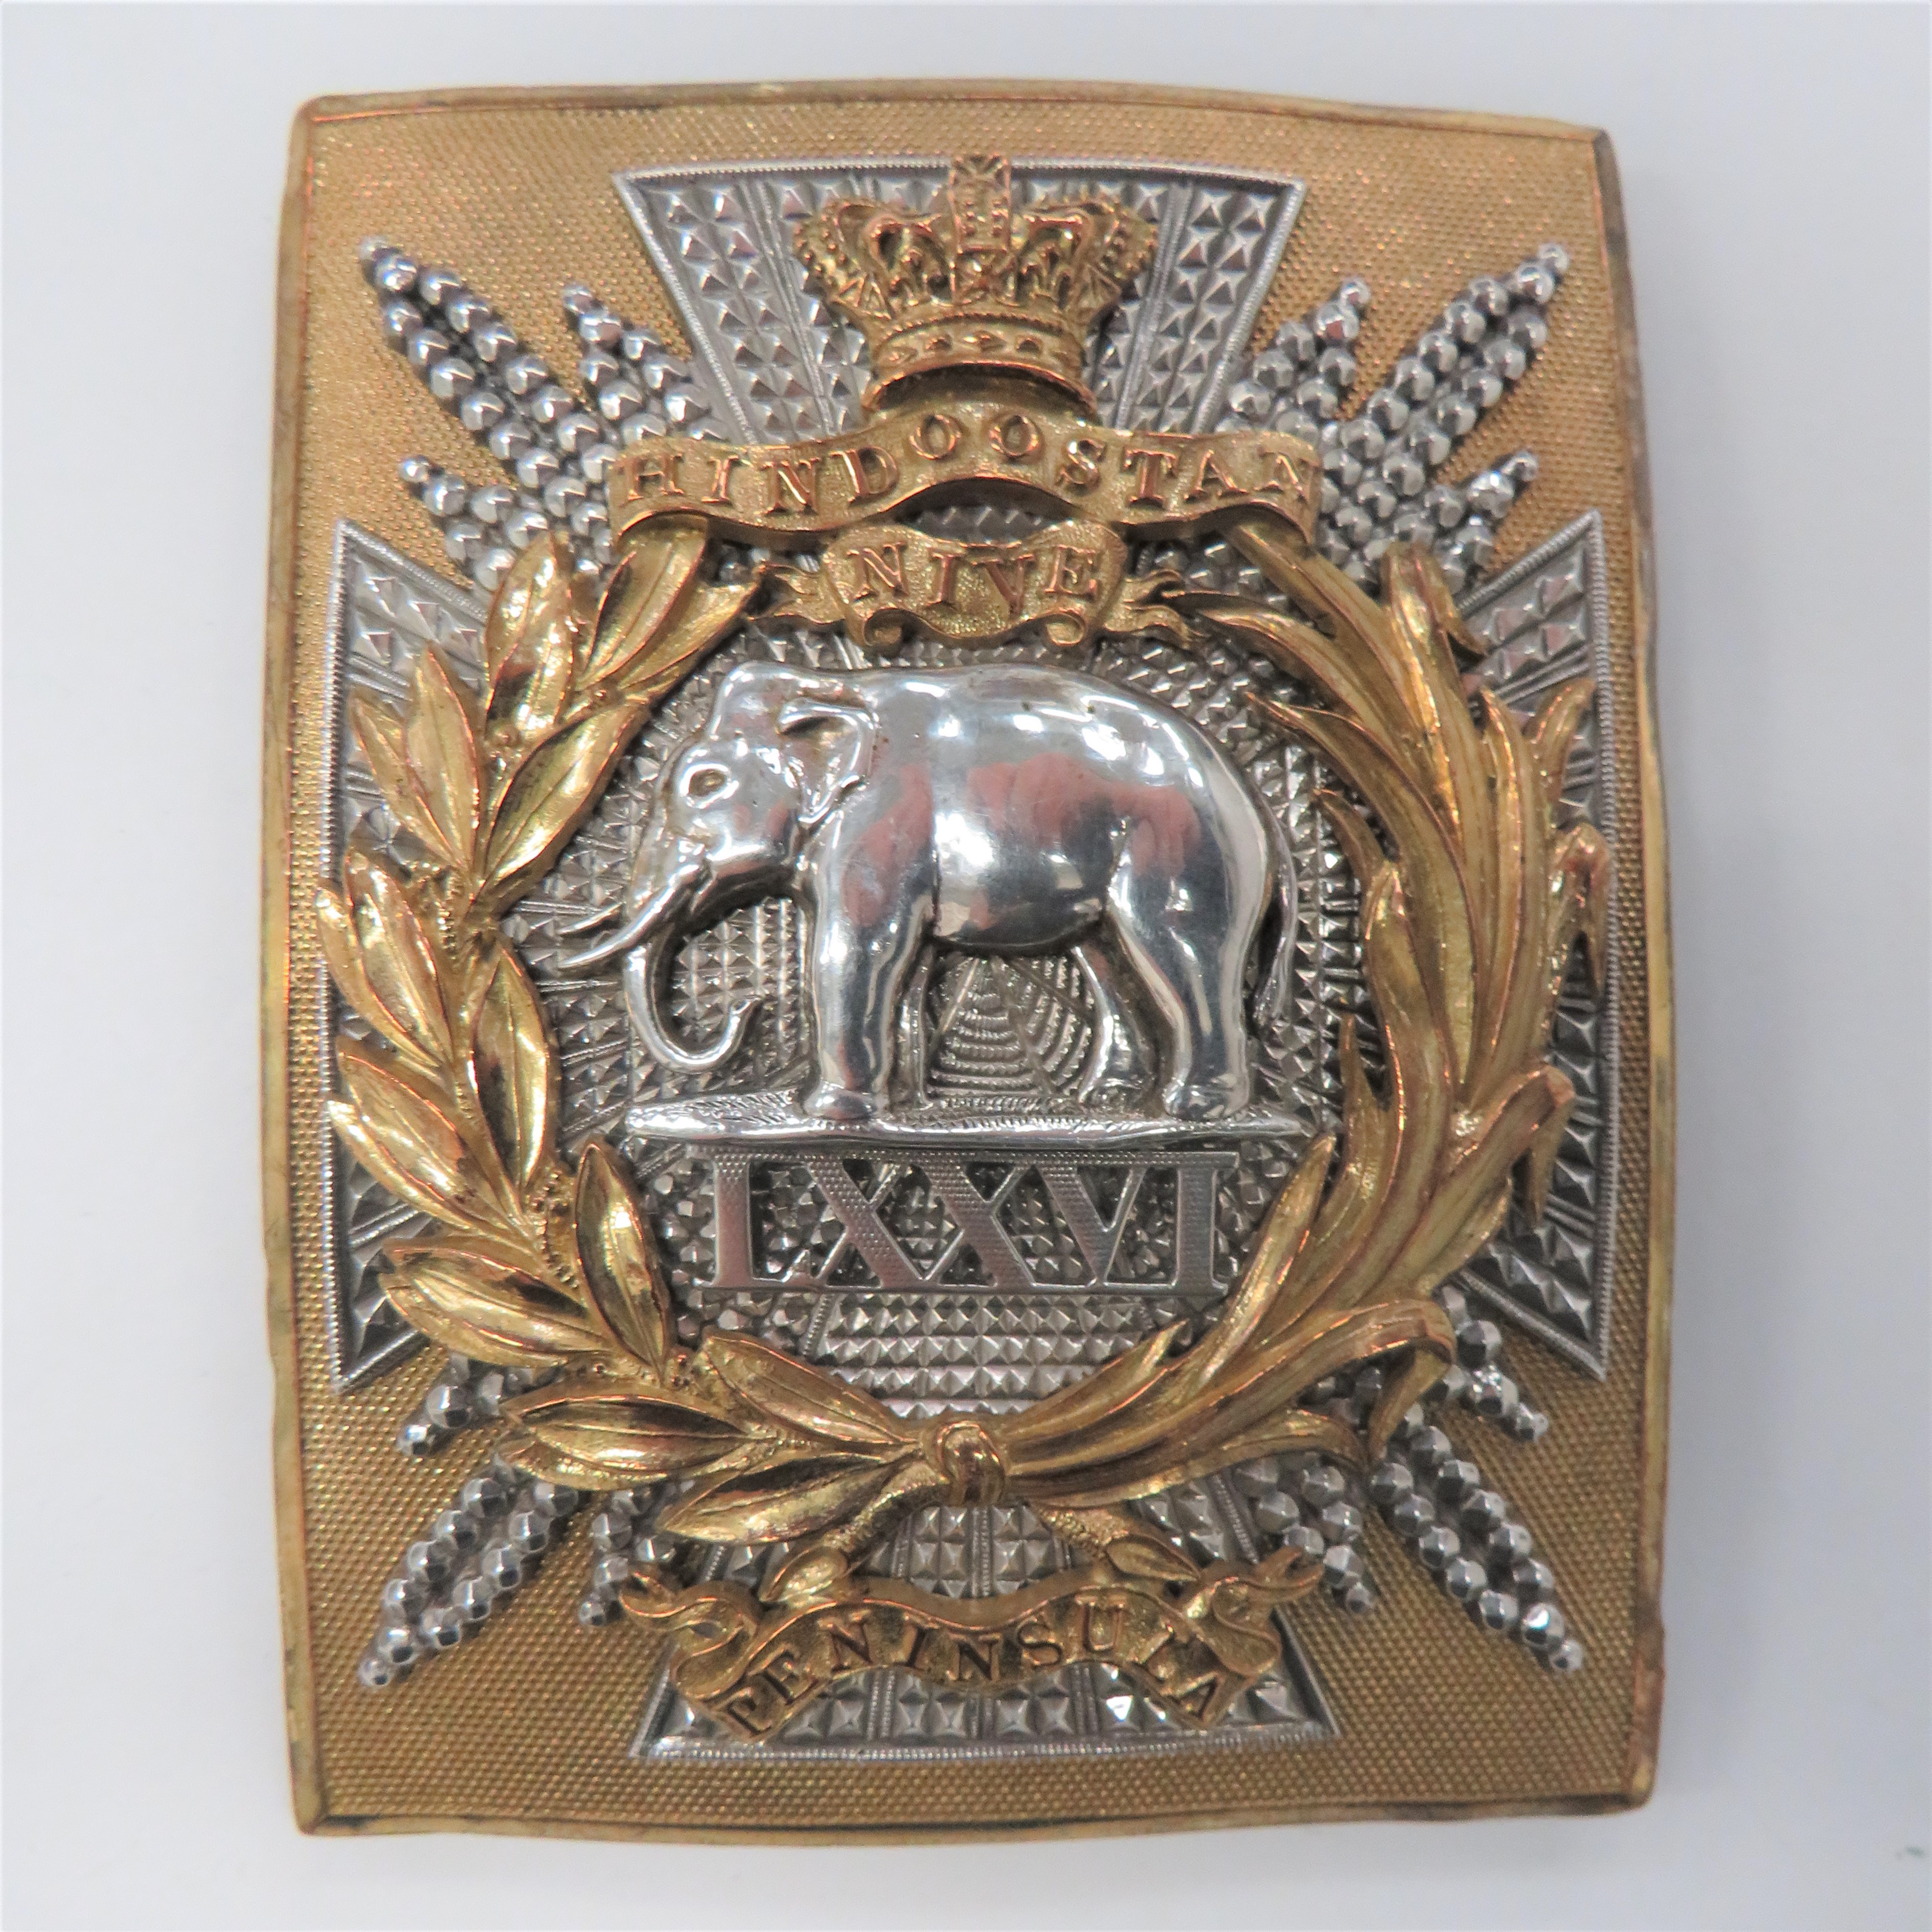 Duke of Wellington's (76th) Regiment Shoulder Belt Plate gilt, rectangular plate overlaid with